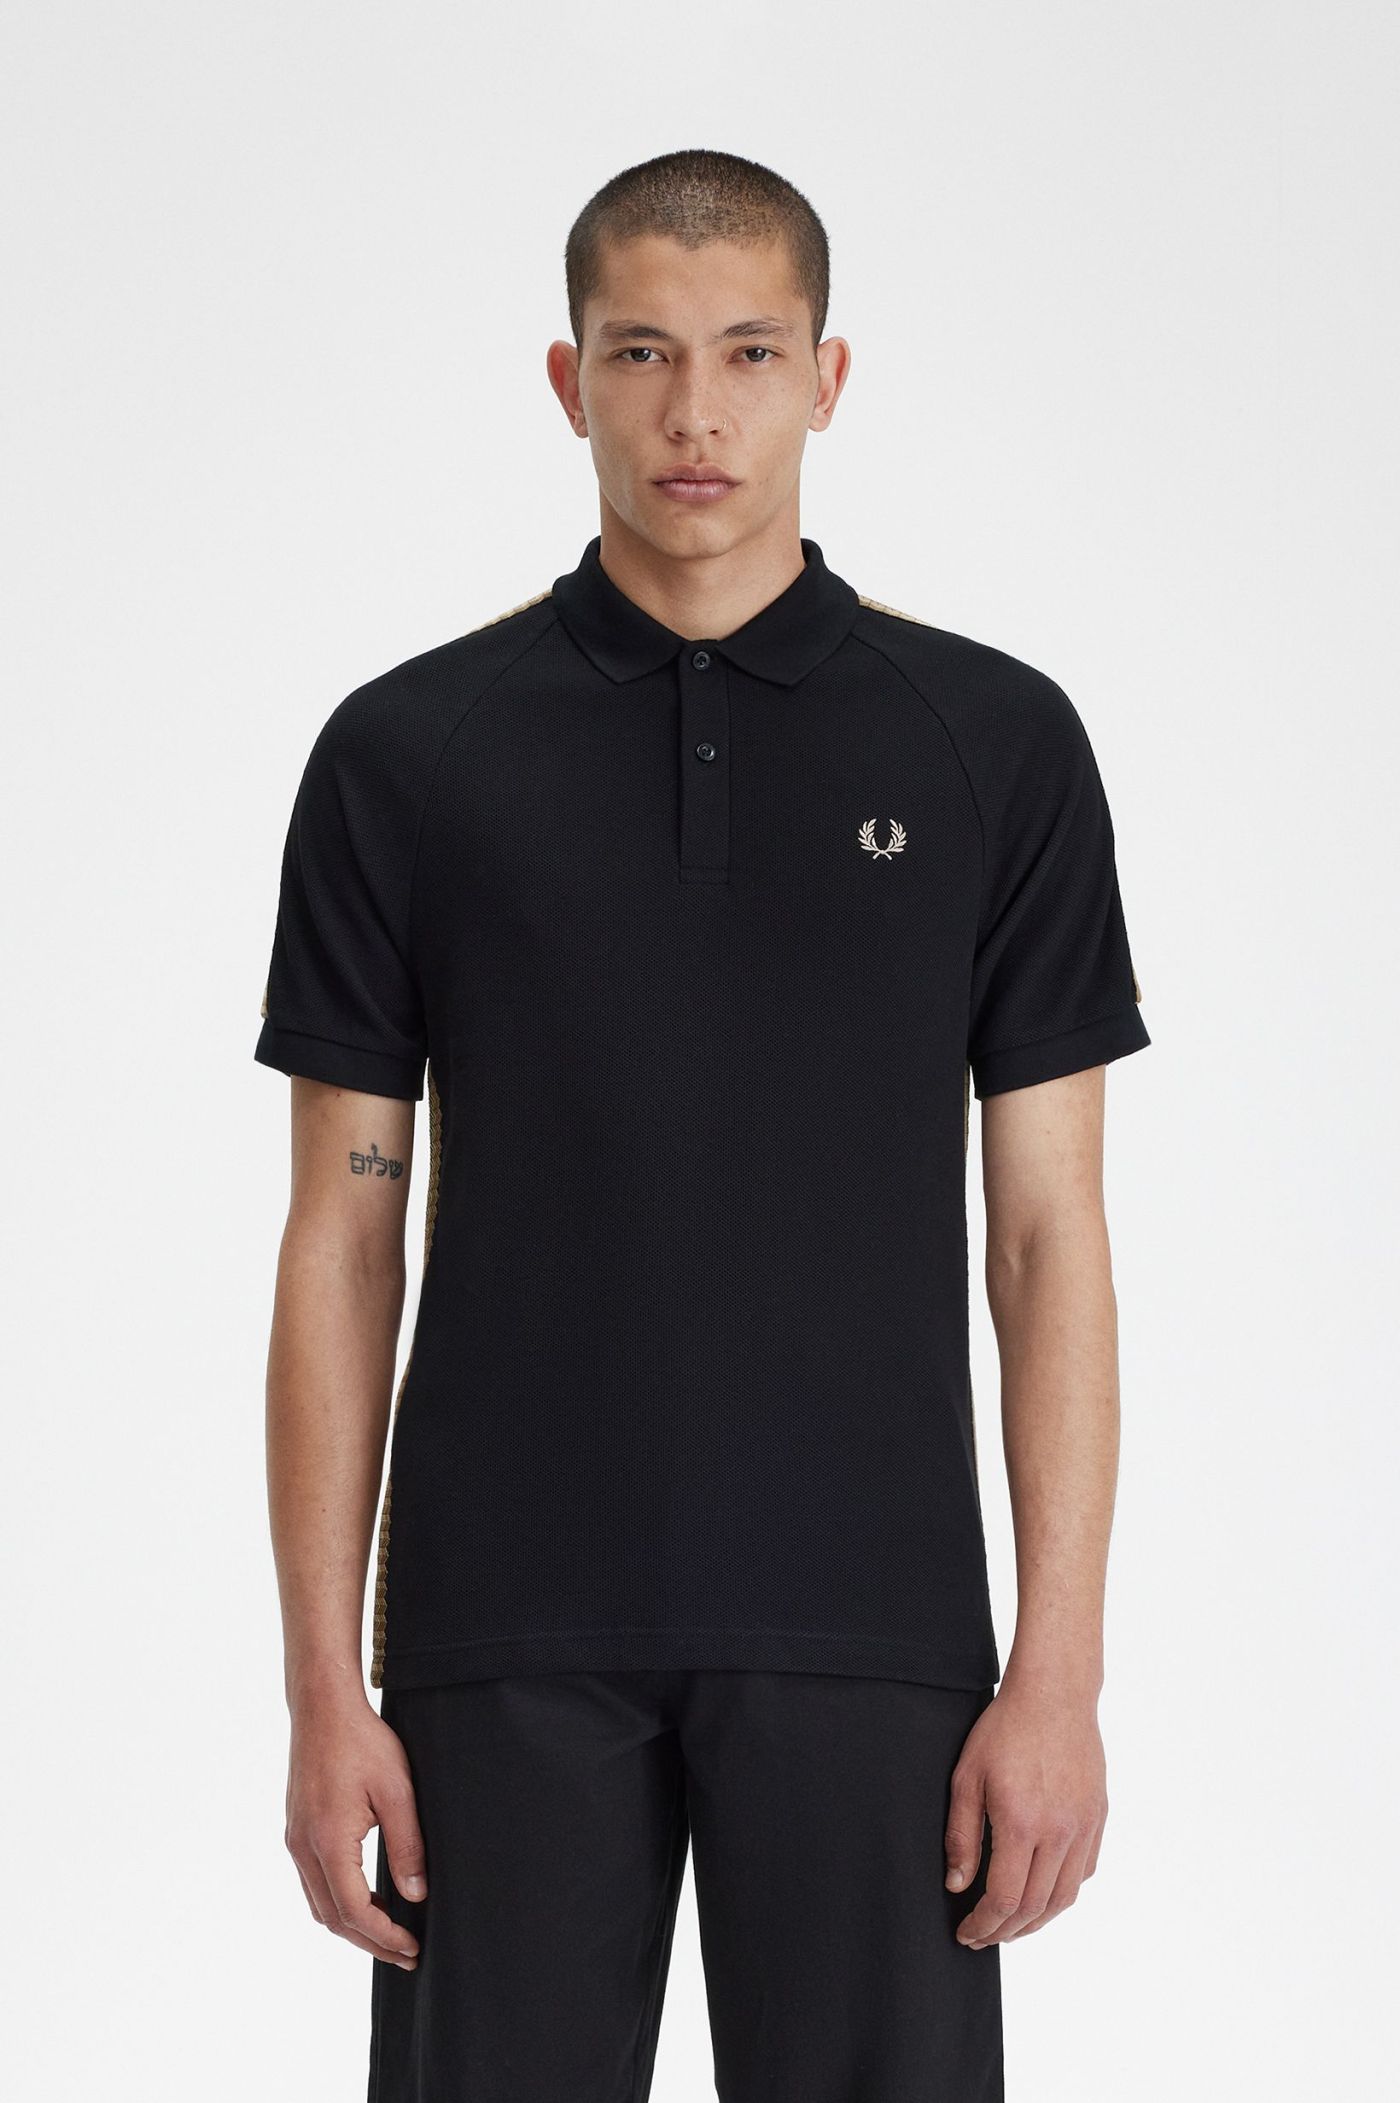 Crochet Taped Polo Shirt - Black | Men's Polo Shirts | Short